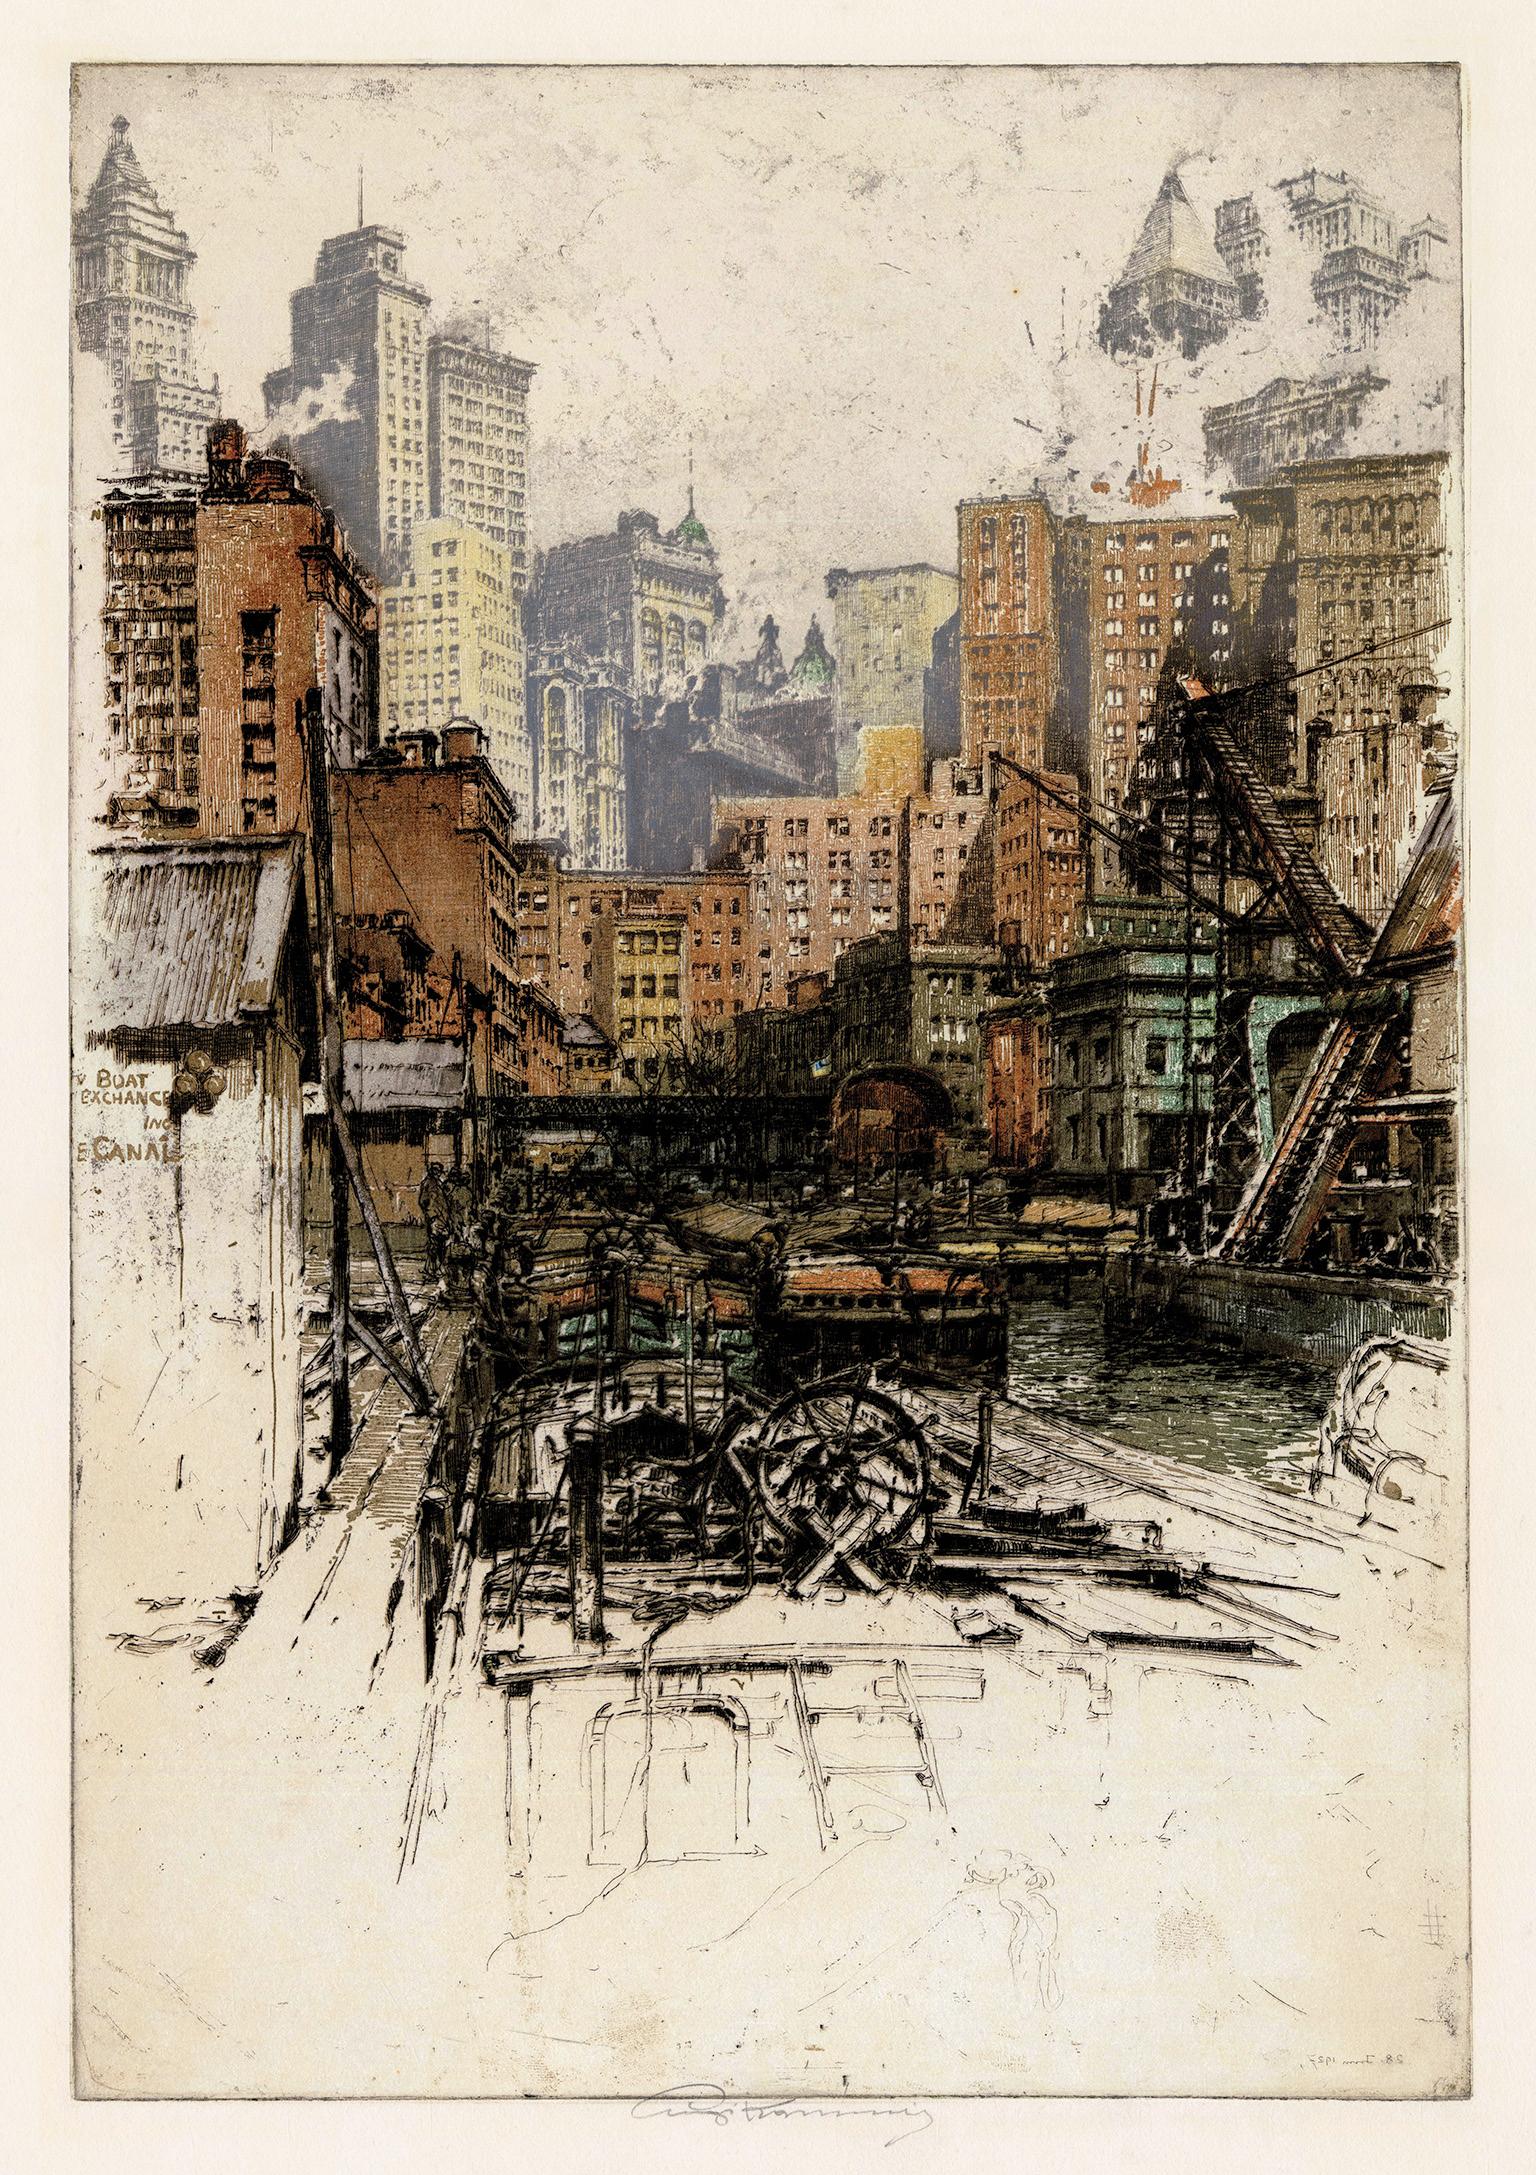 Luigi Kasimir Landscape Print - 'Coenties Slip' — 1920s Lower Manhattan, Financial District